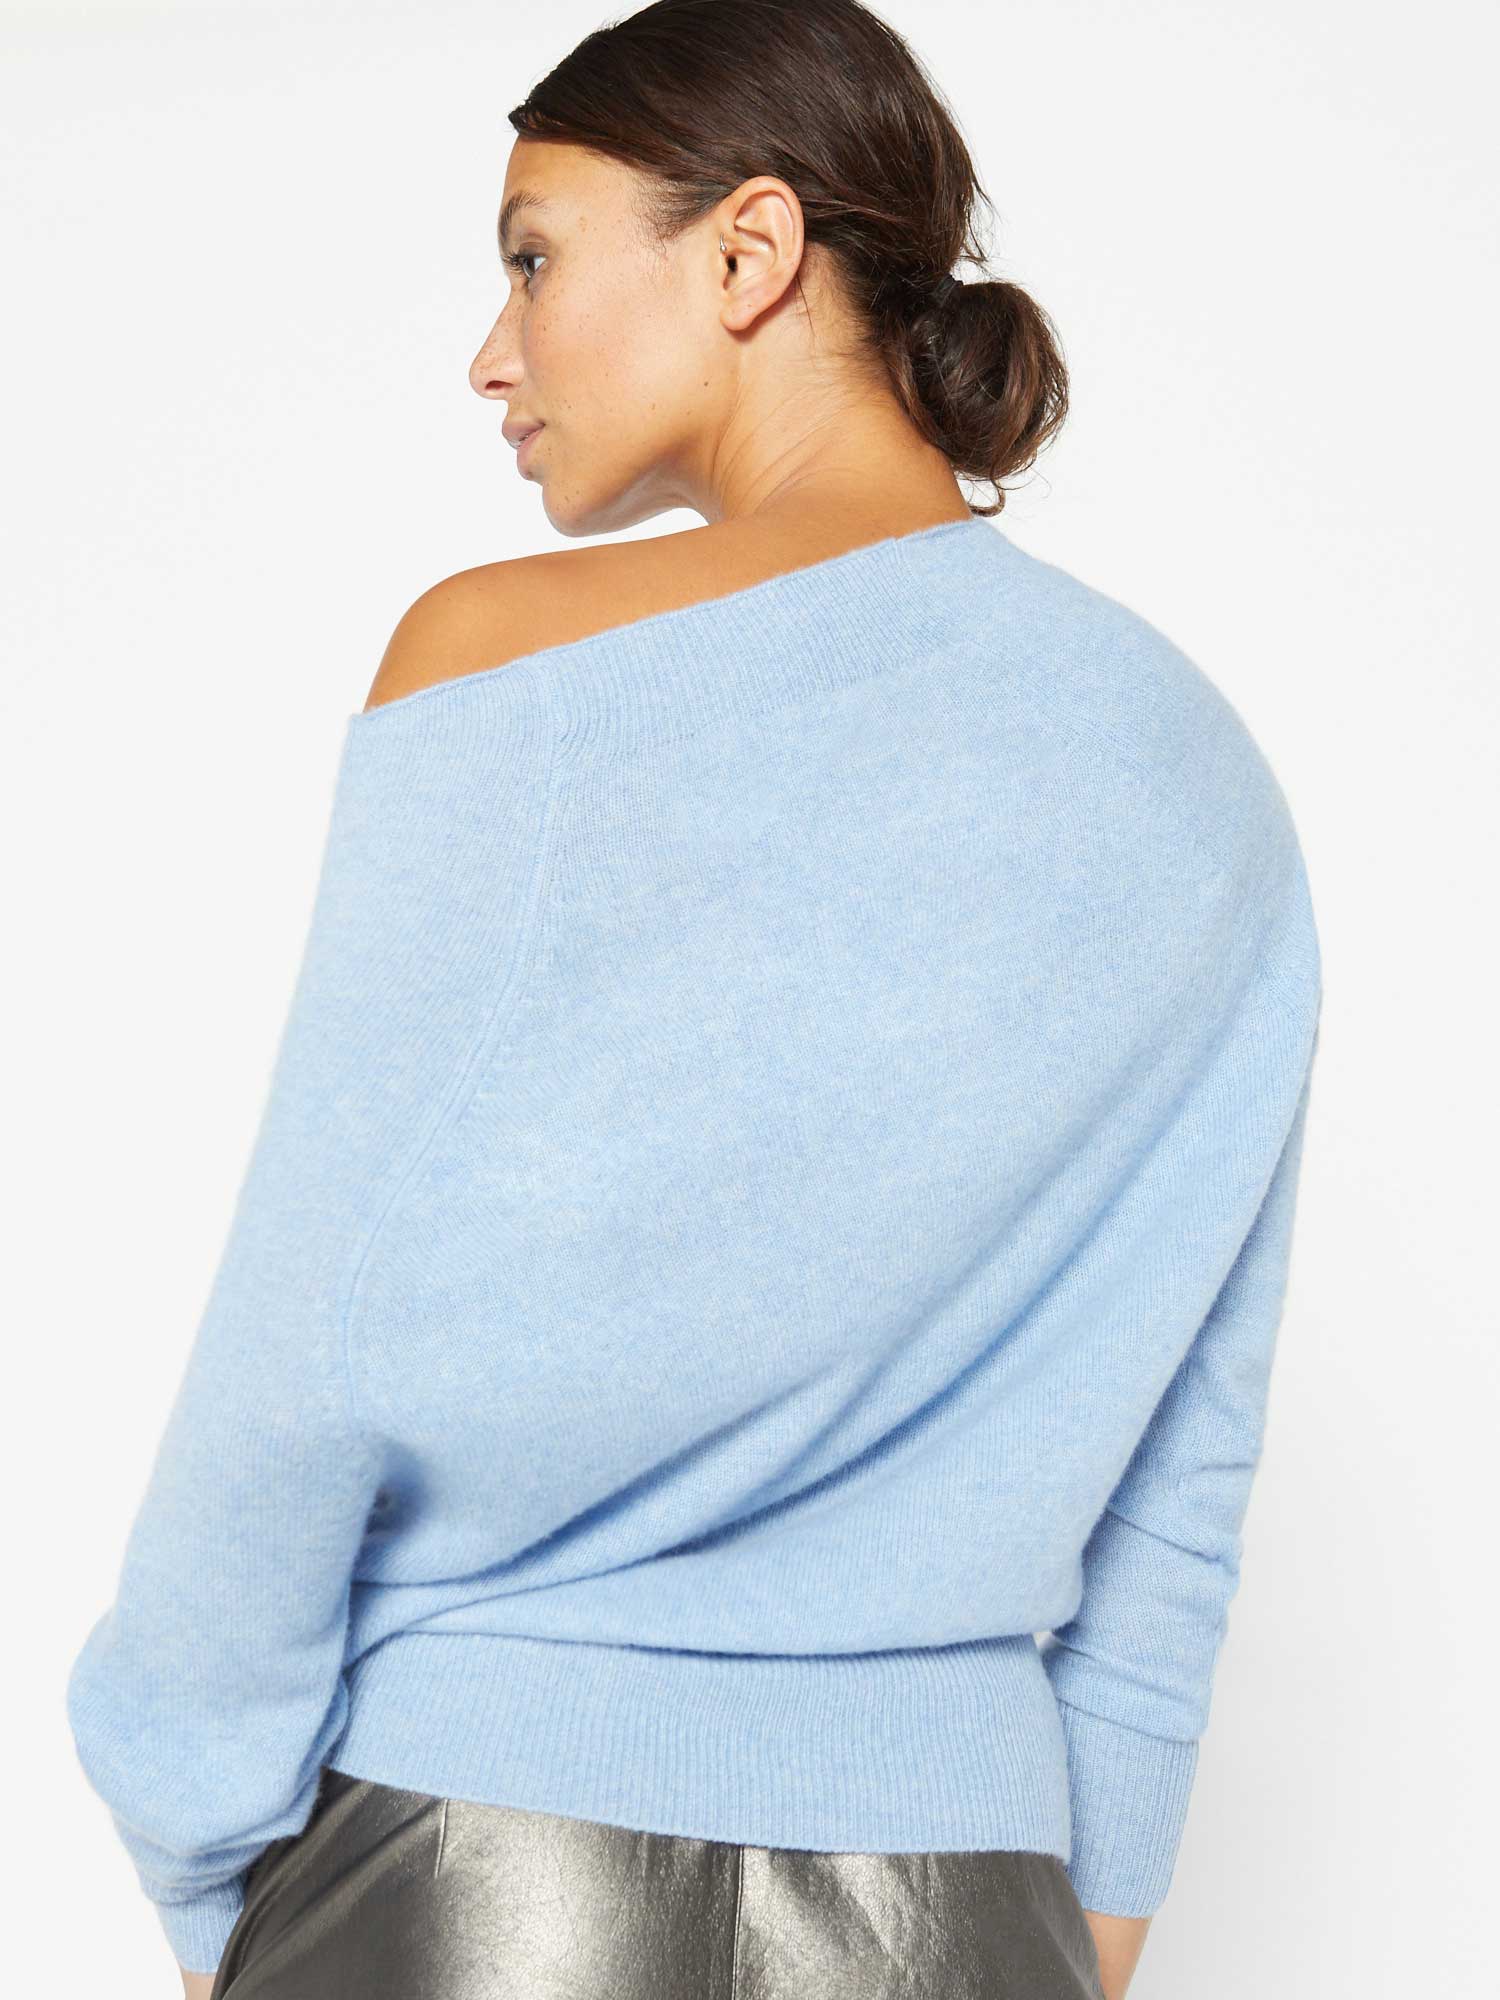 Lori cashmere off shoulder blue sweater back view